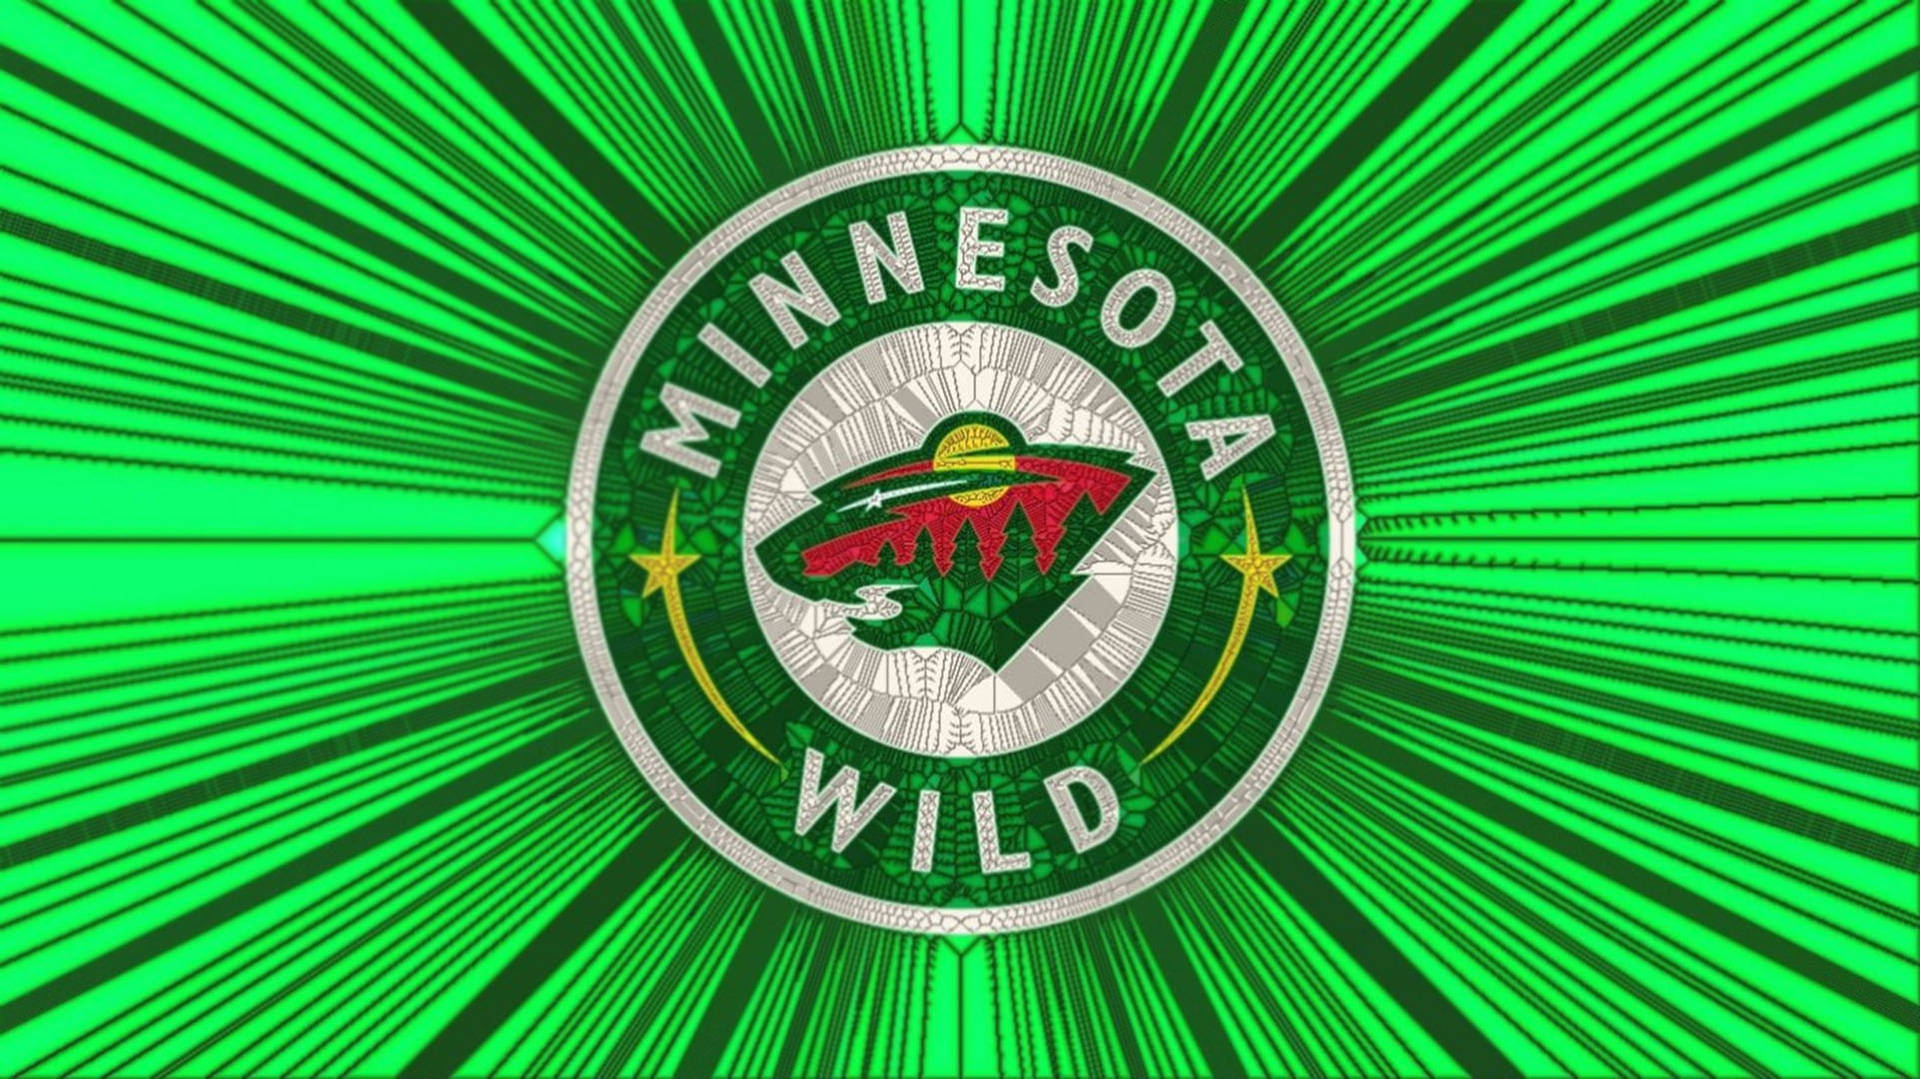 Minnesota Wild Green Rays